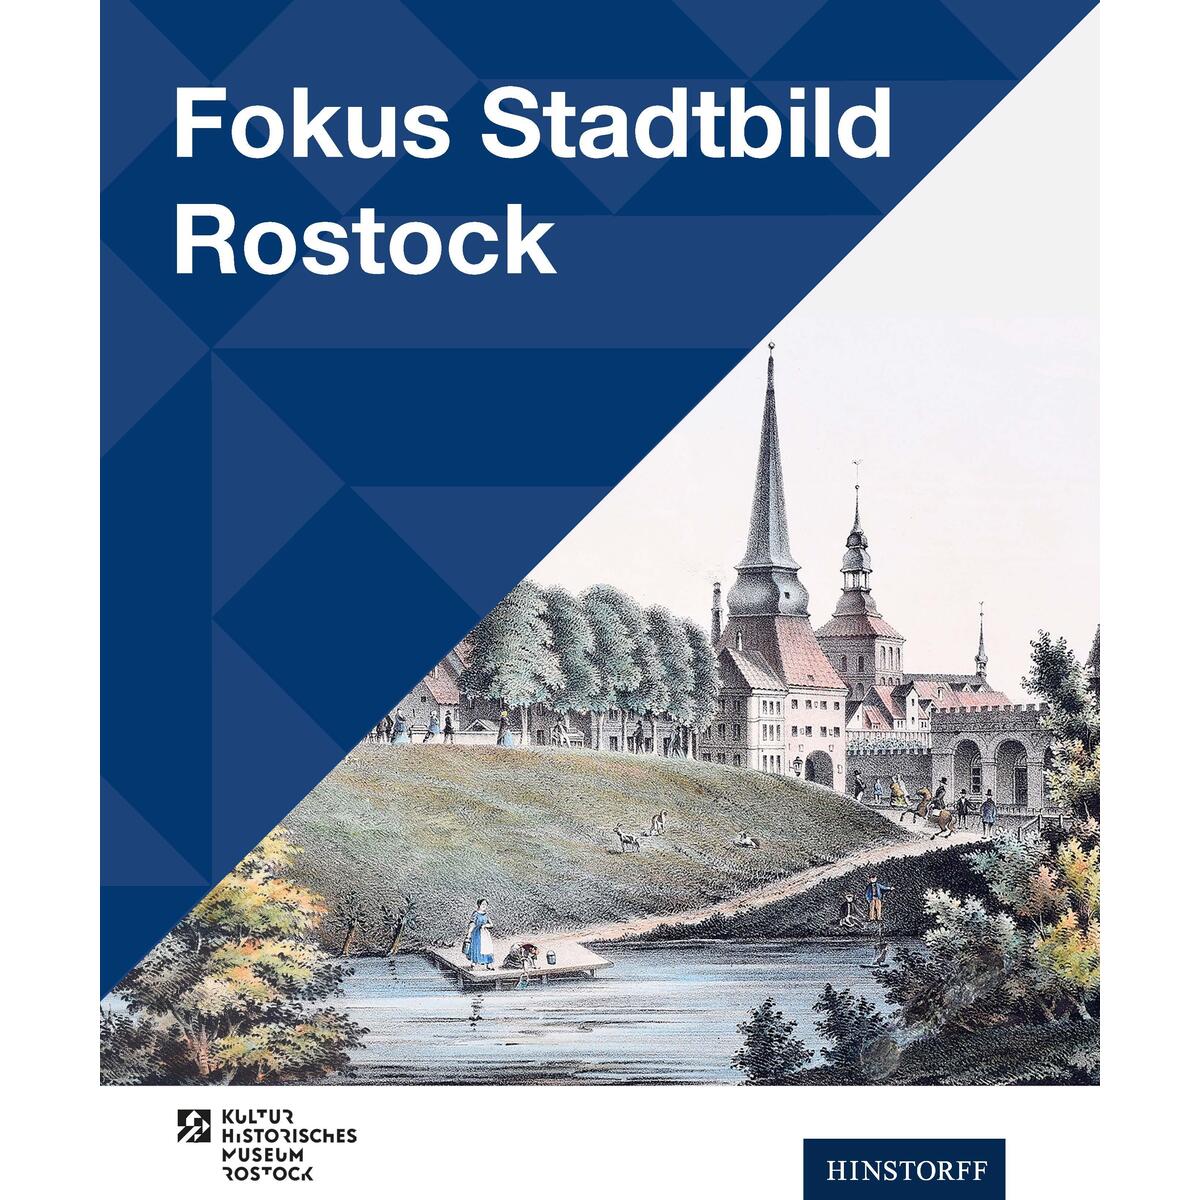 Fokus Stadtbild Rostock von Hinstorff Verlag GmbH